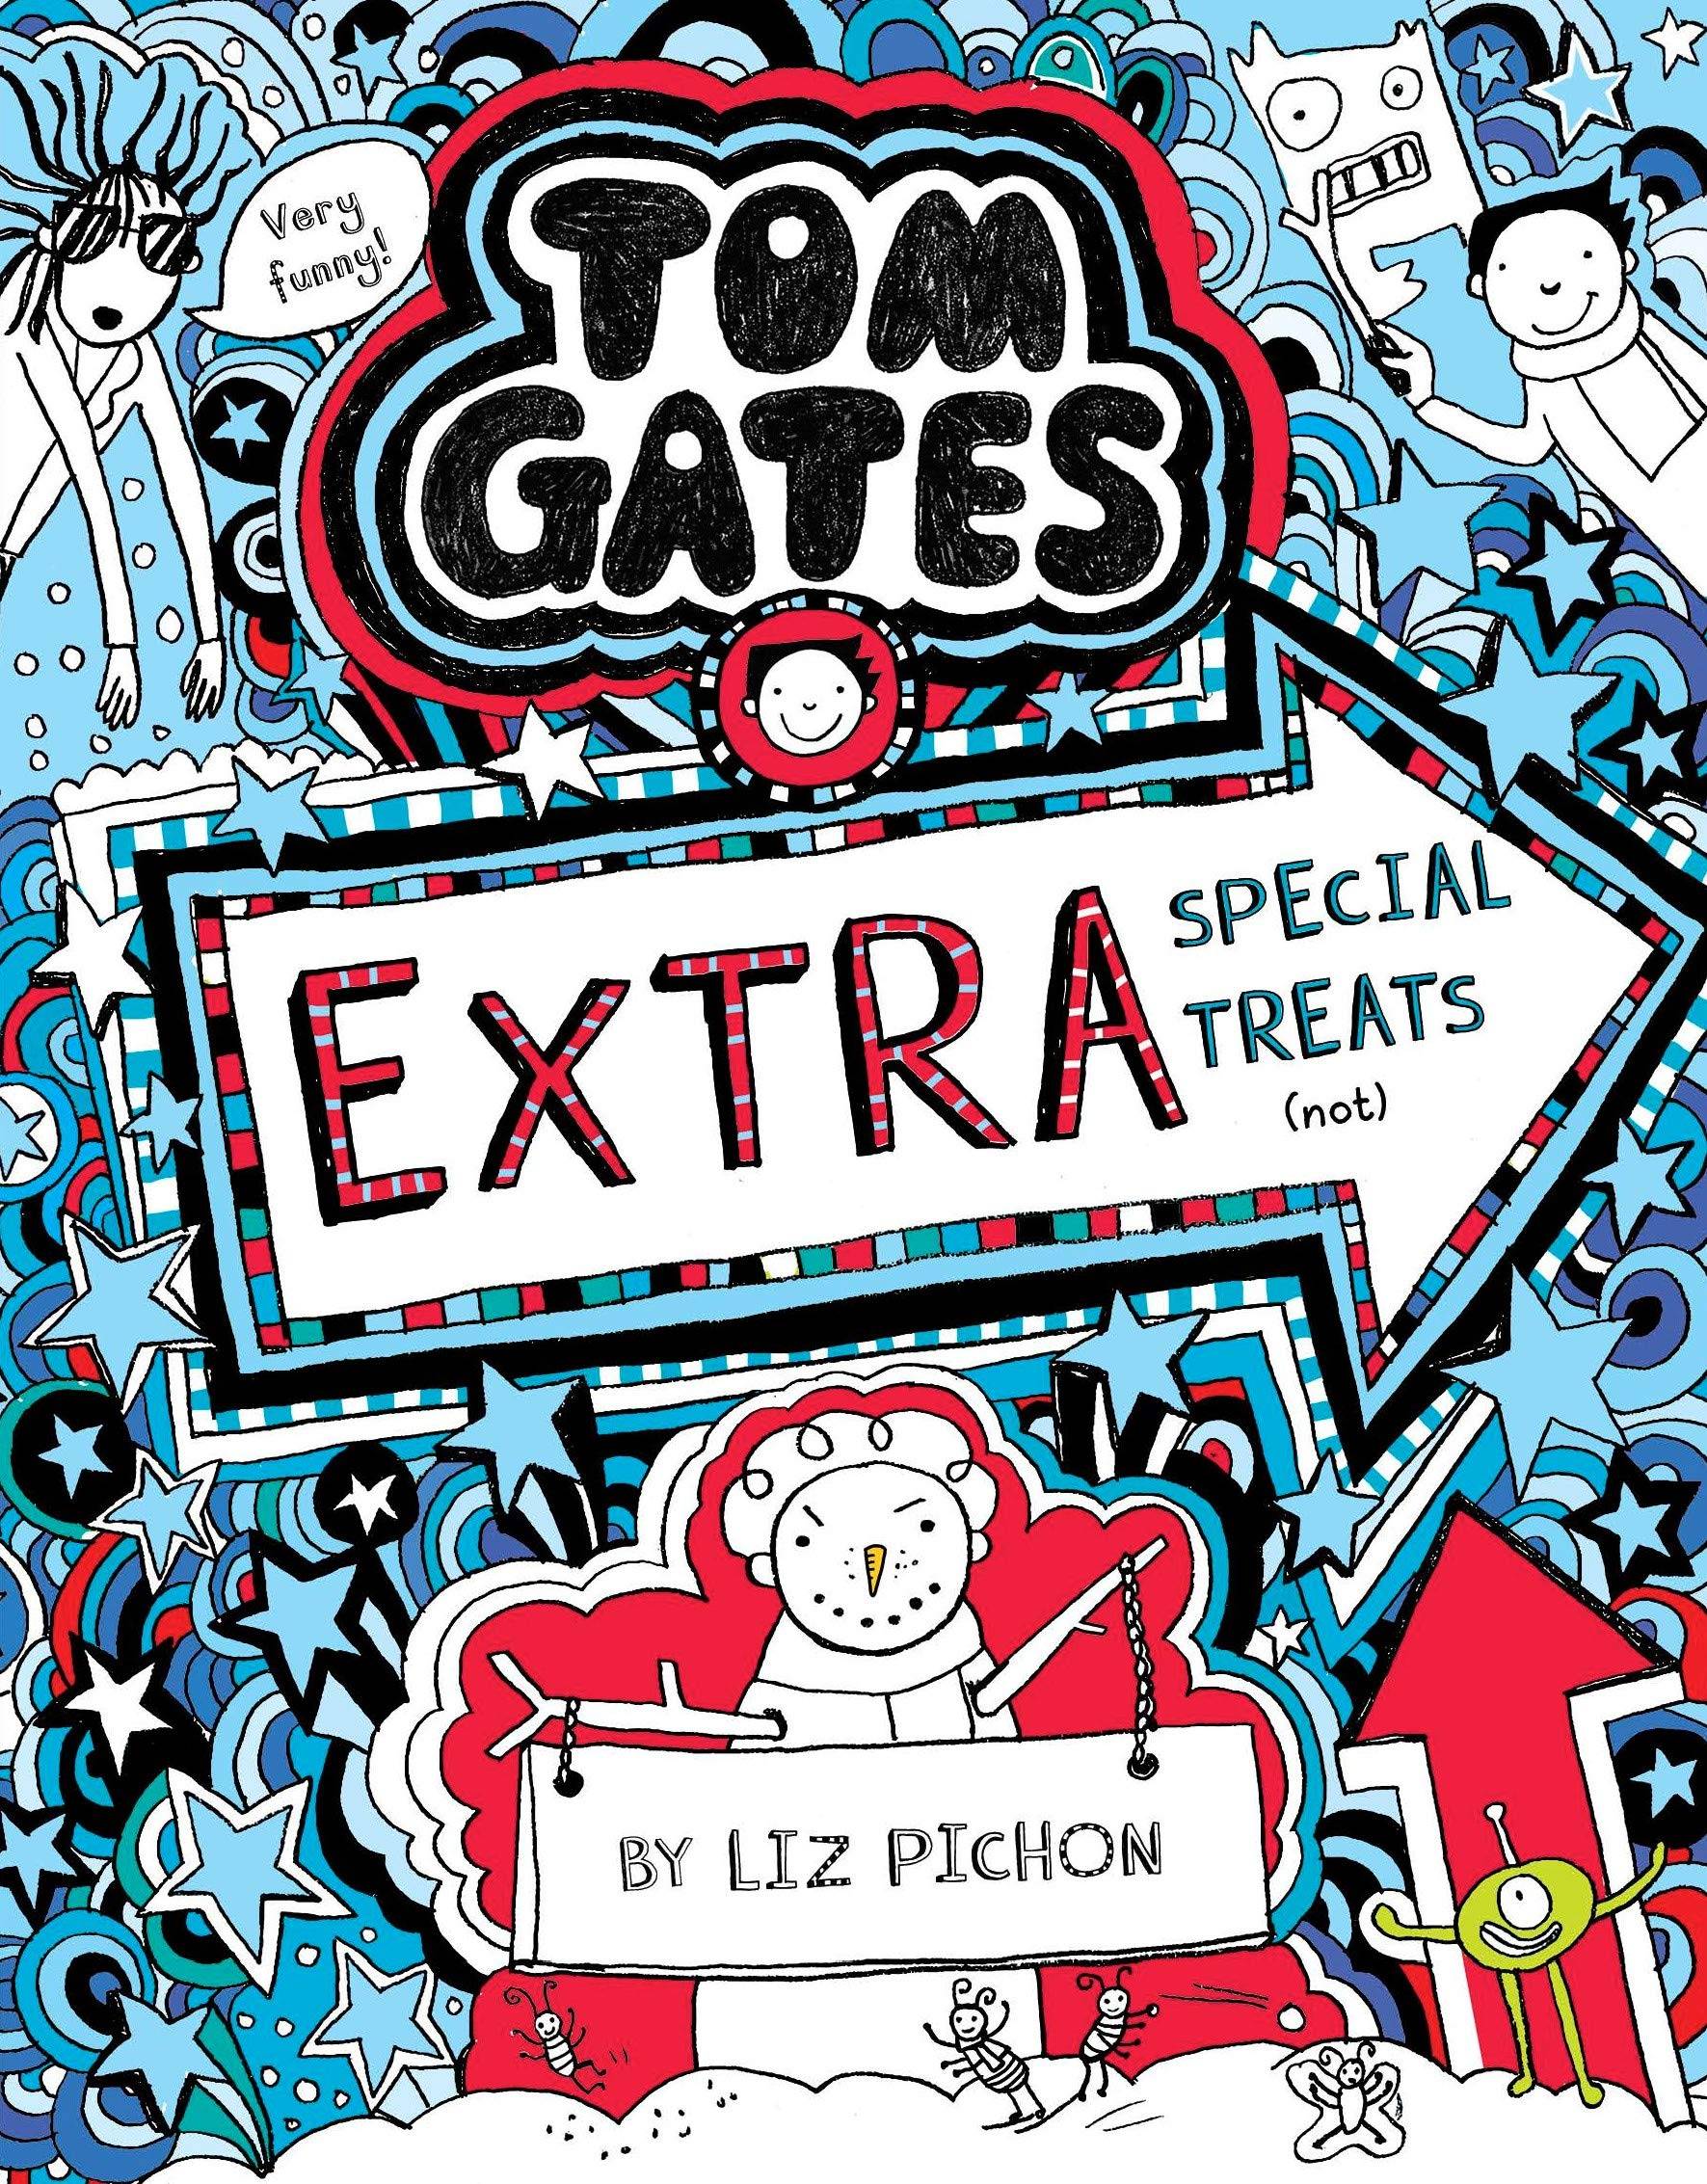 IMG : Tom Gates Extra Special Treats (not)